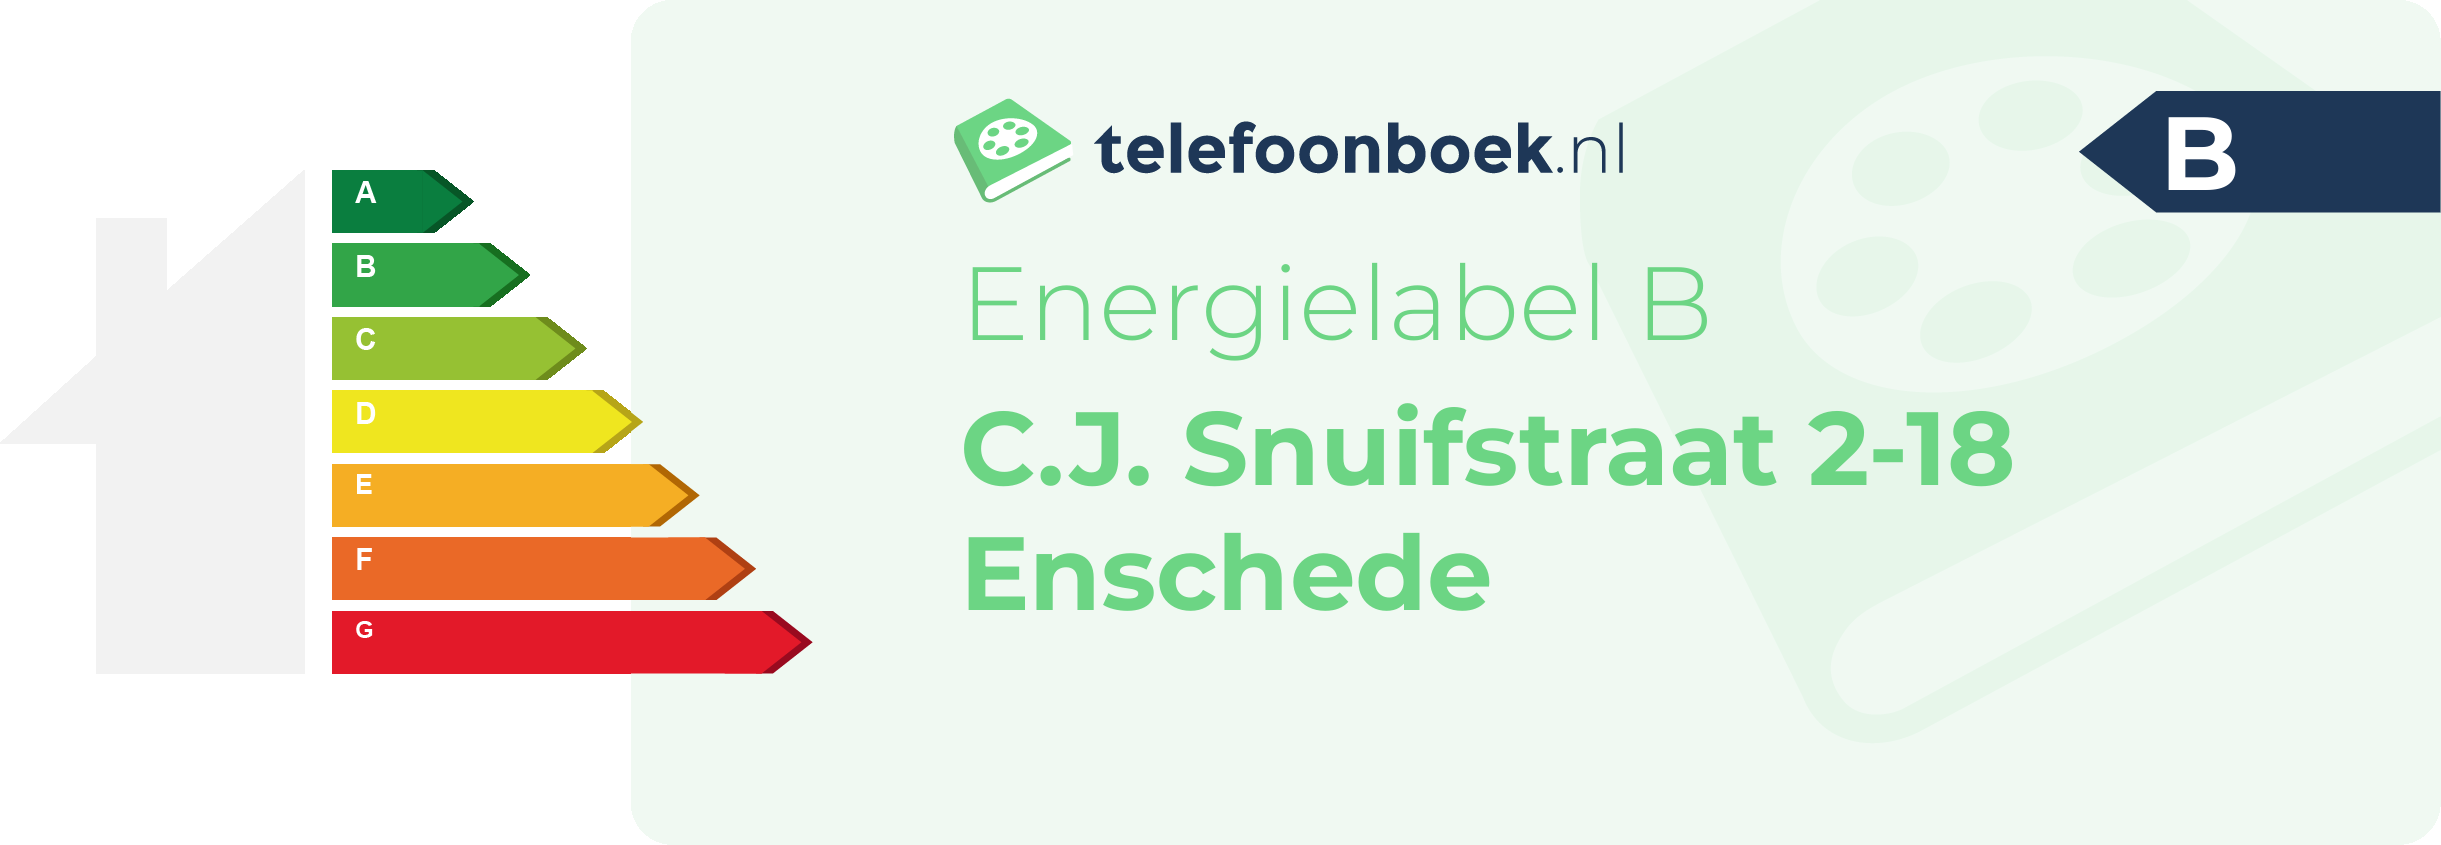 Energielabel C.J. Snuifstraat 2-18 Enschede